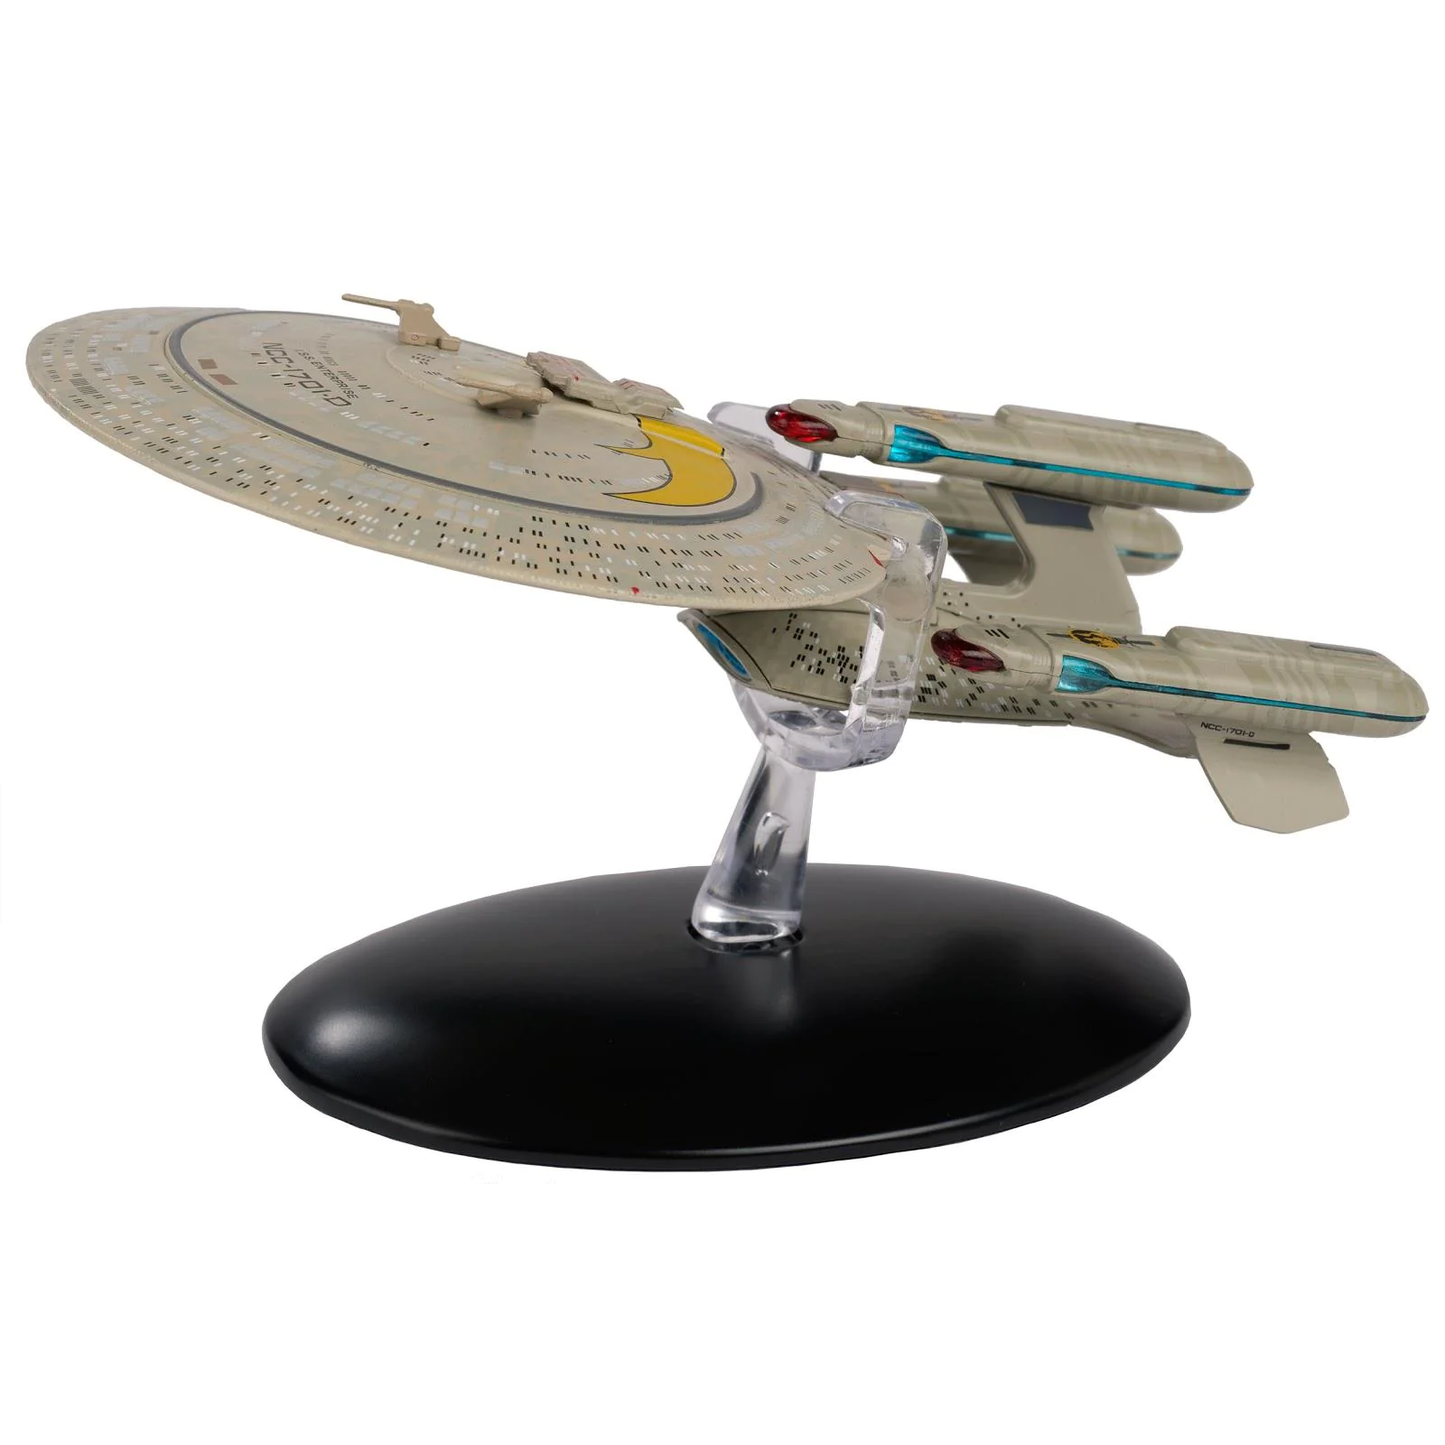 #17 I.S.S. Enterprise-D NCC-1701-D Mirror Universe (Paint Variant) Model Diecast Ship BONUS ISSUE (Eaglemoss / Star Trek)